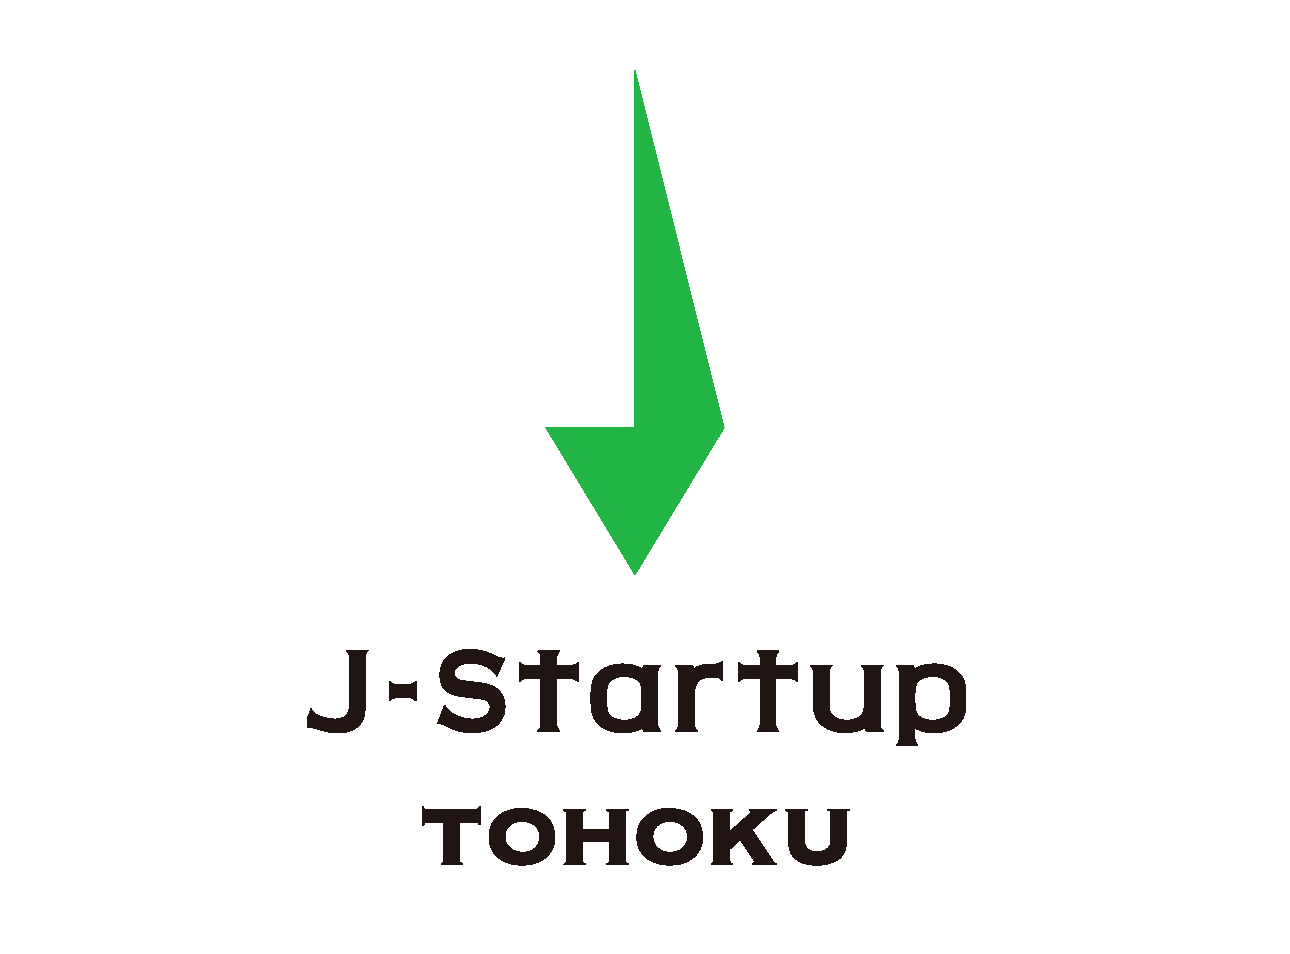 RevolKa has been selected as "J-Startup TOHOKU".